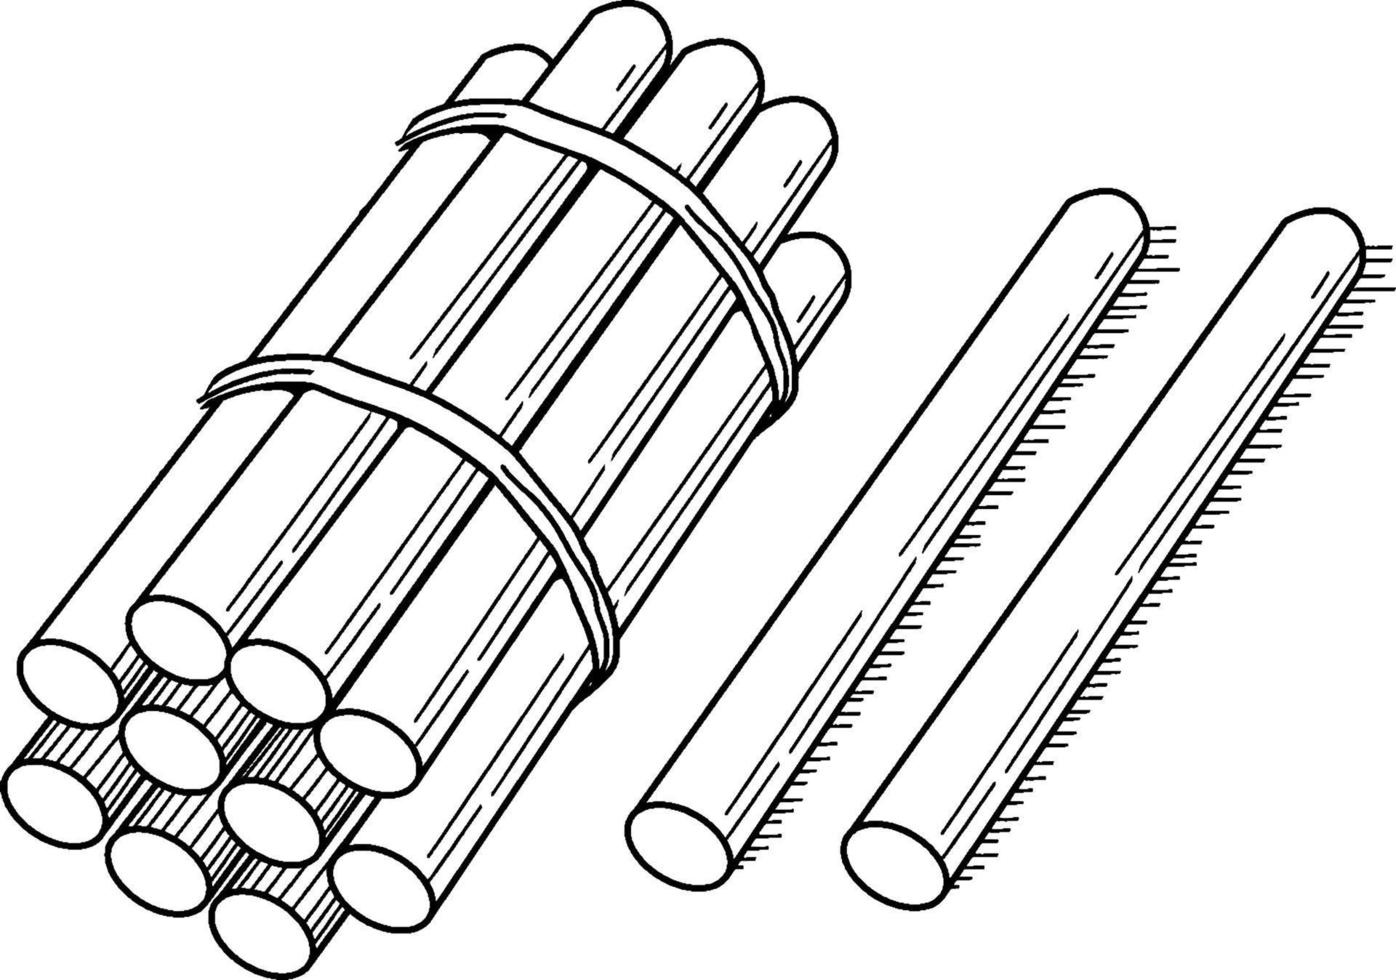 12 bâtons, illustration vintage. vecteur